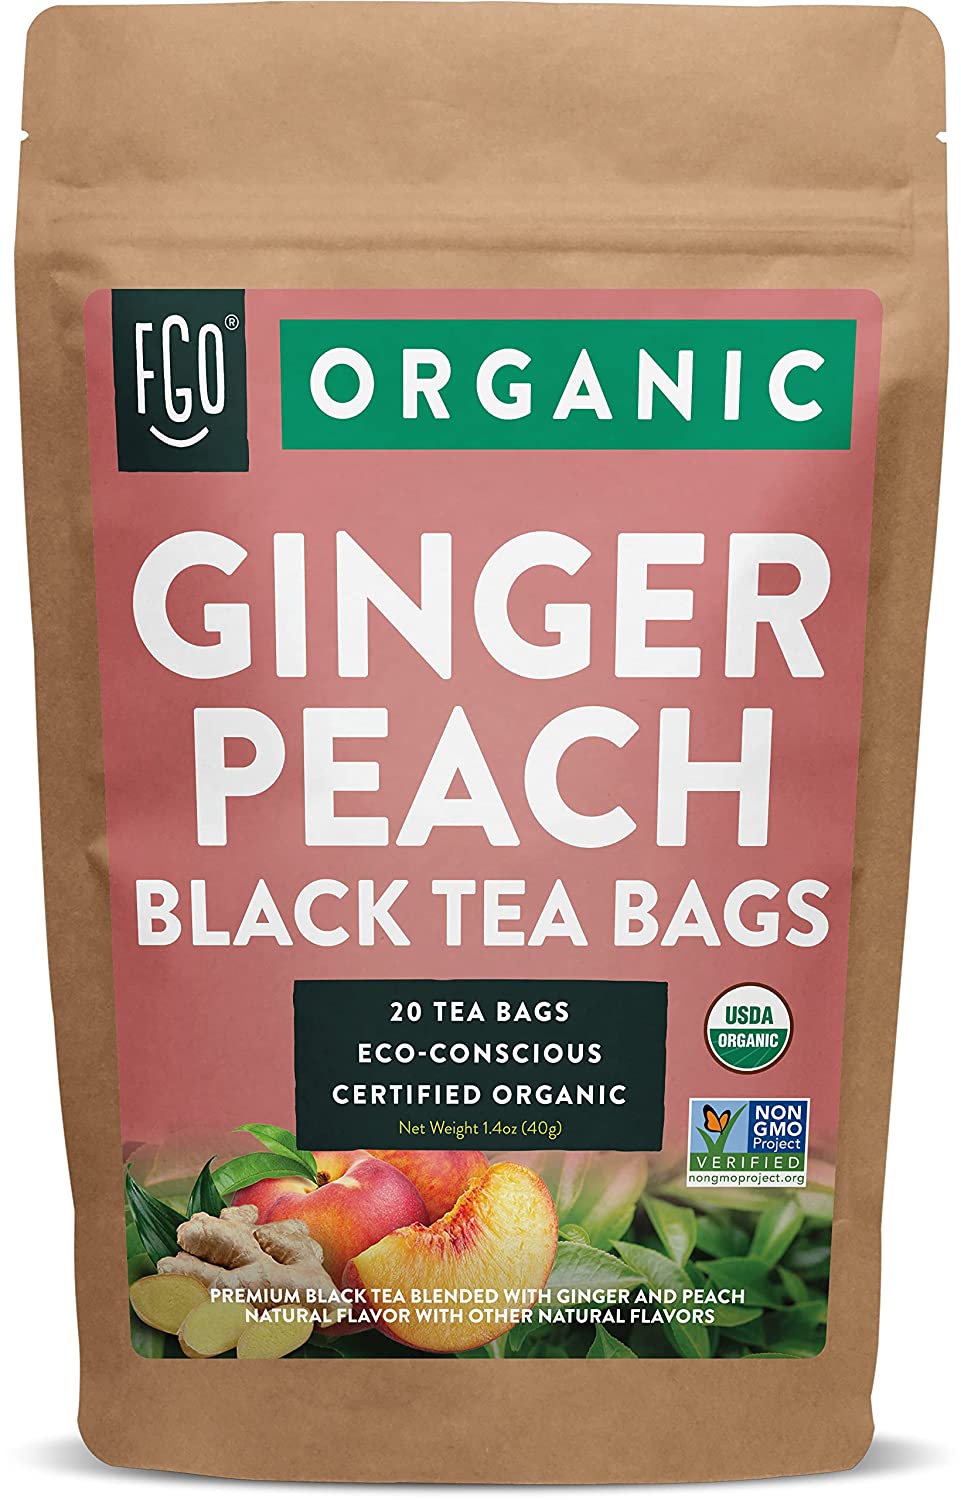 Finest Aromatic Ginger Peach Black Tea - Delicious Flavor - 50 Count